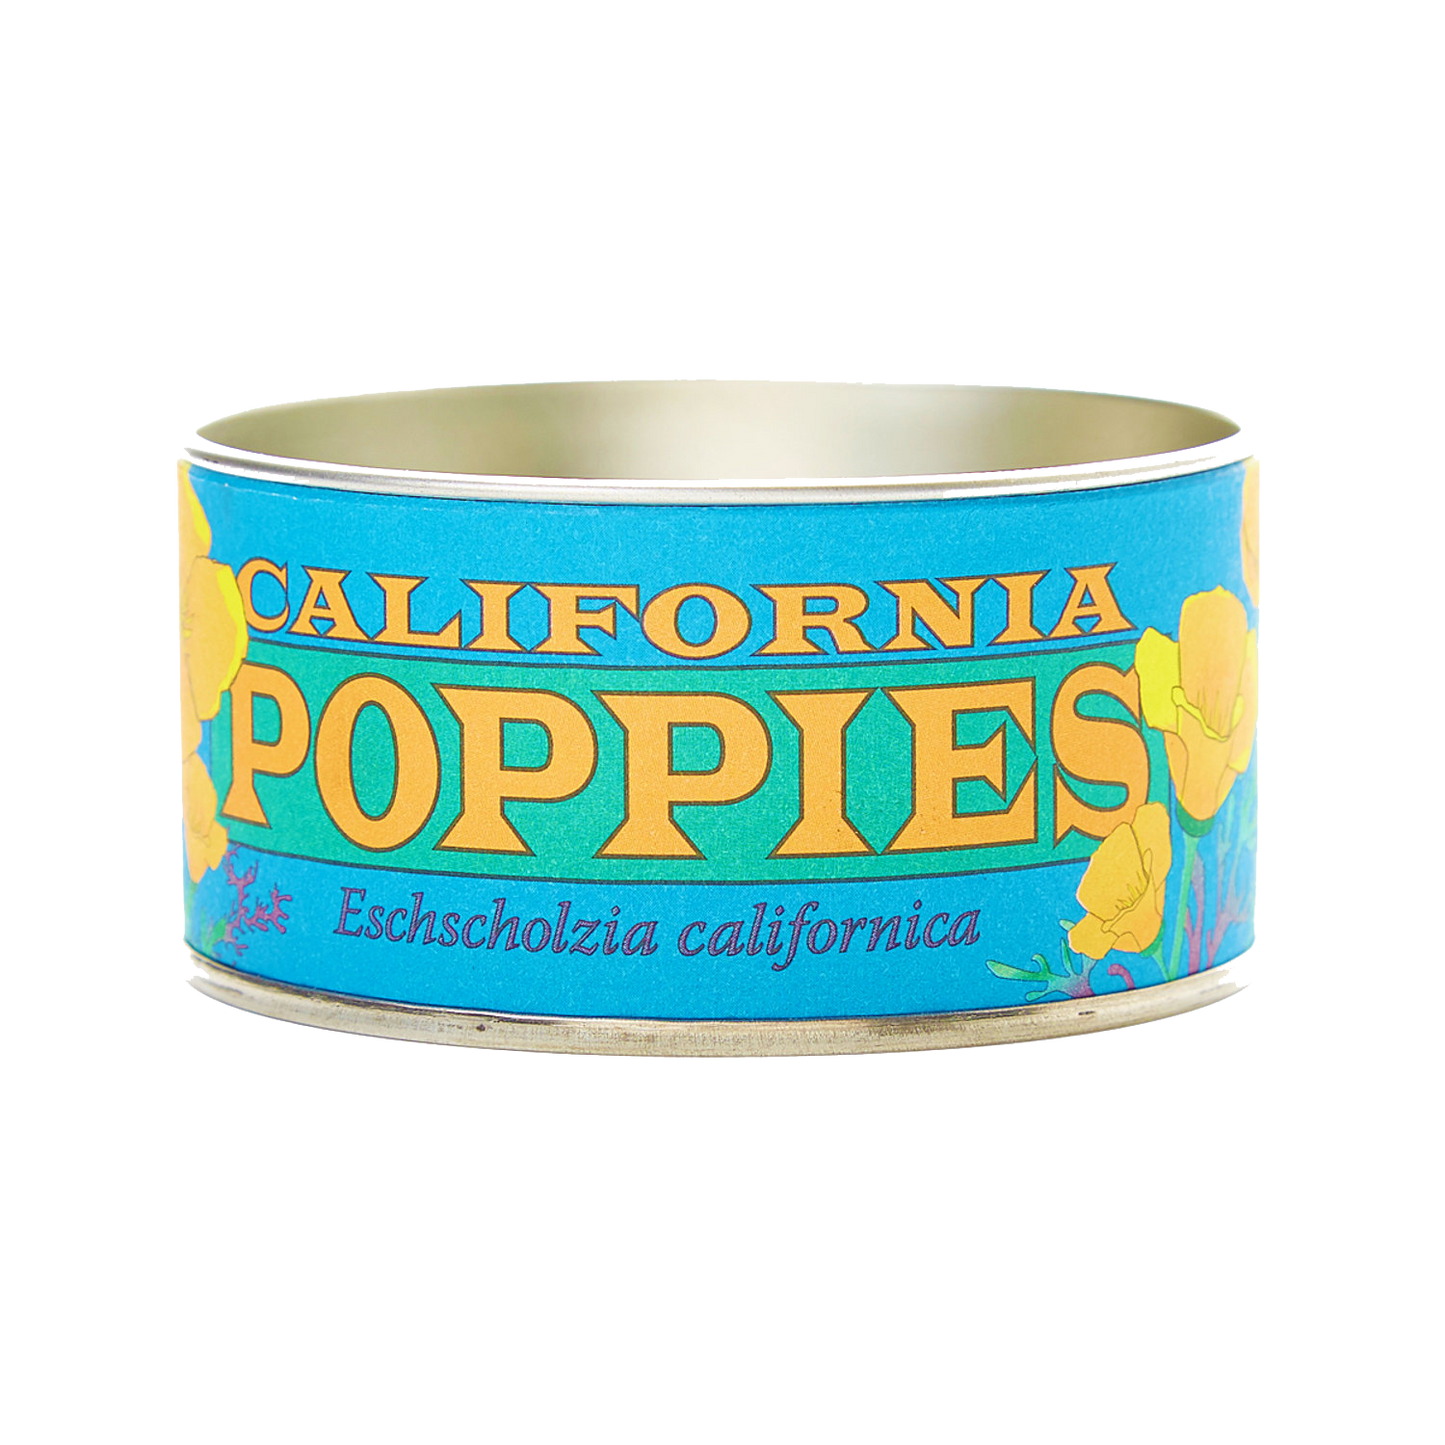 California poppies seed grow kit.